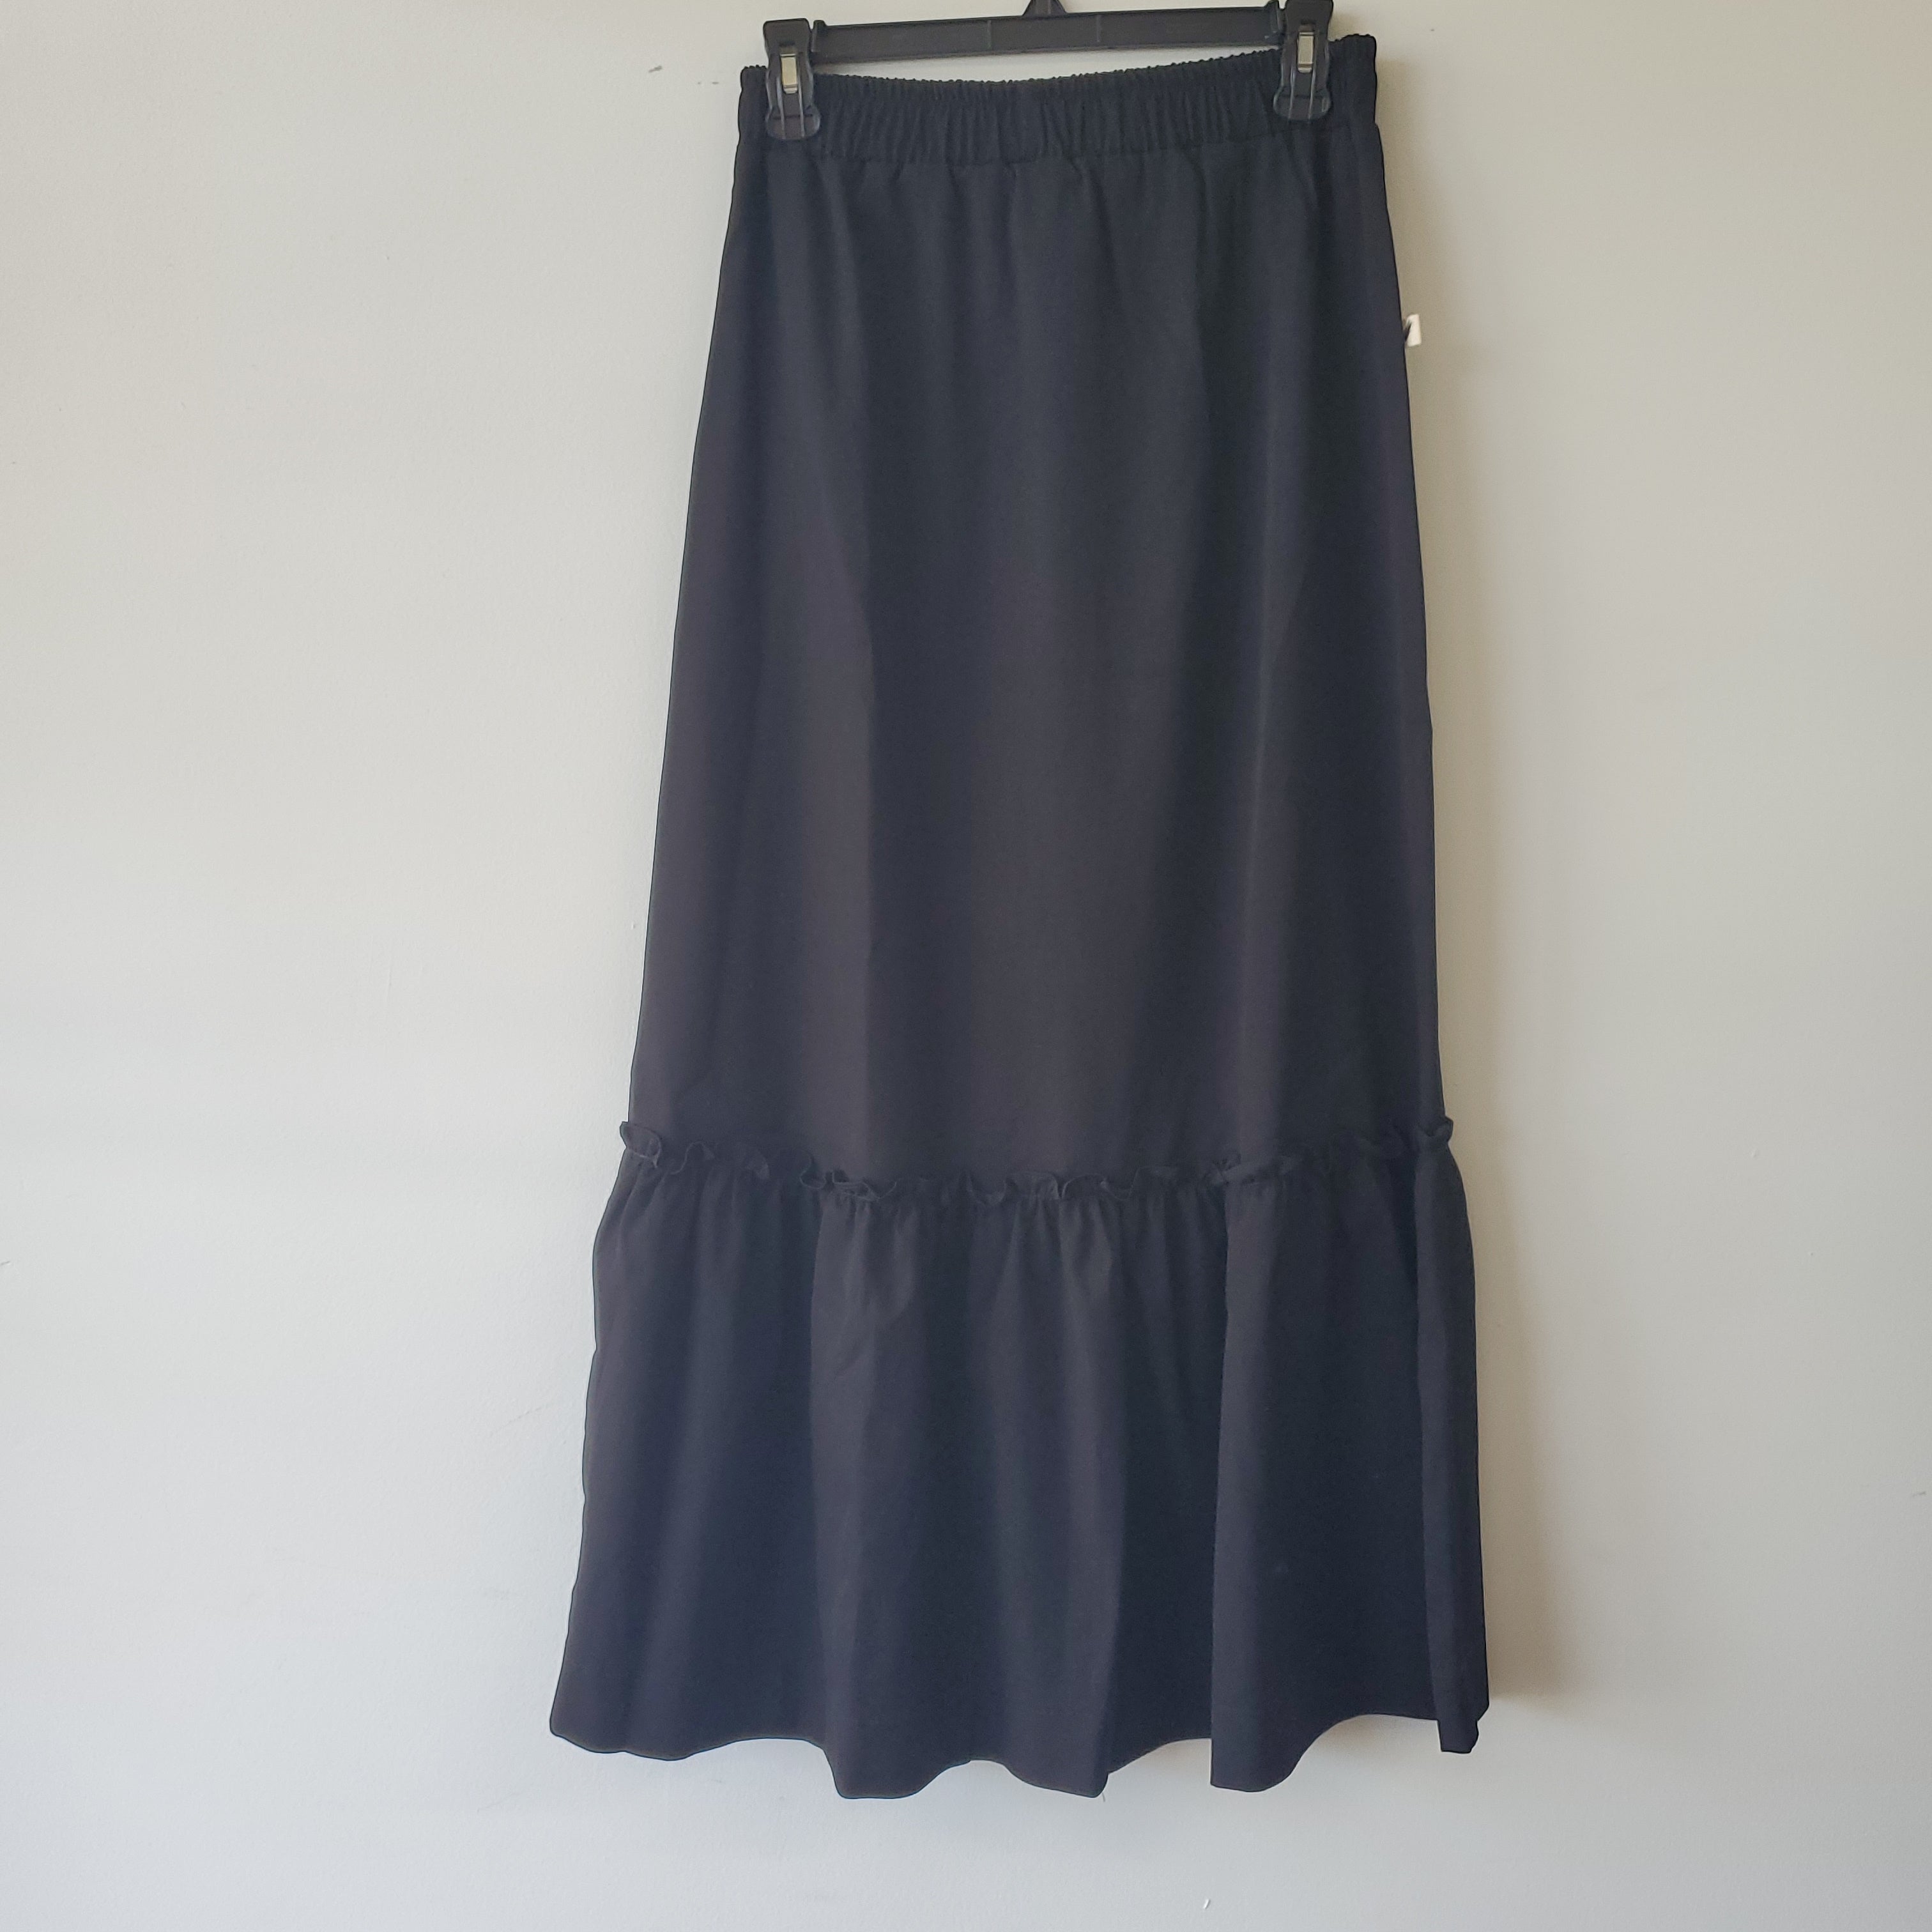 Black Polished Maxi Skirt